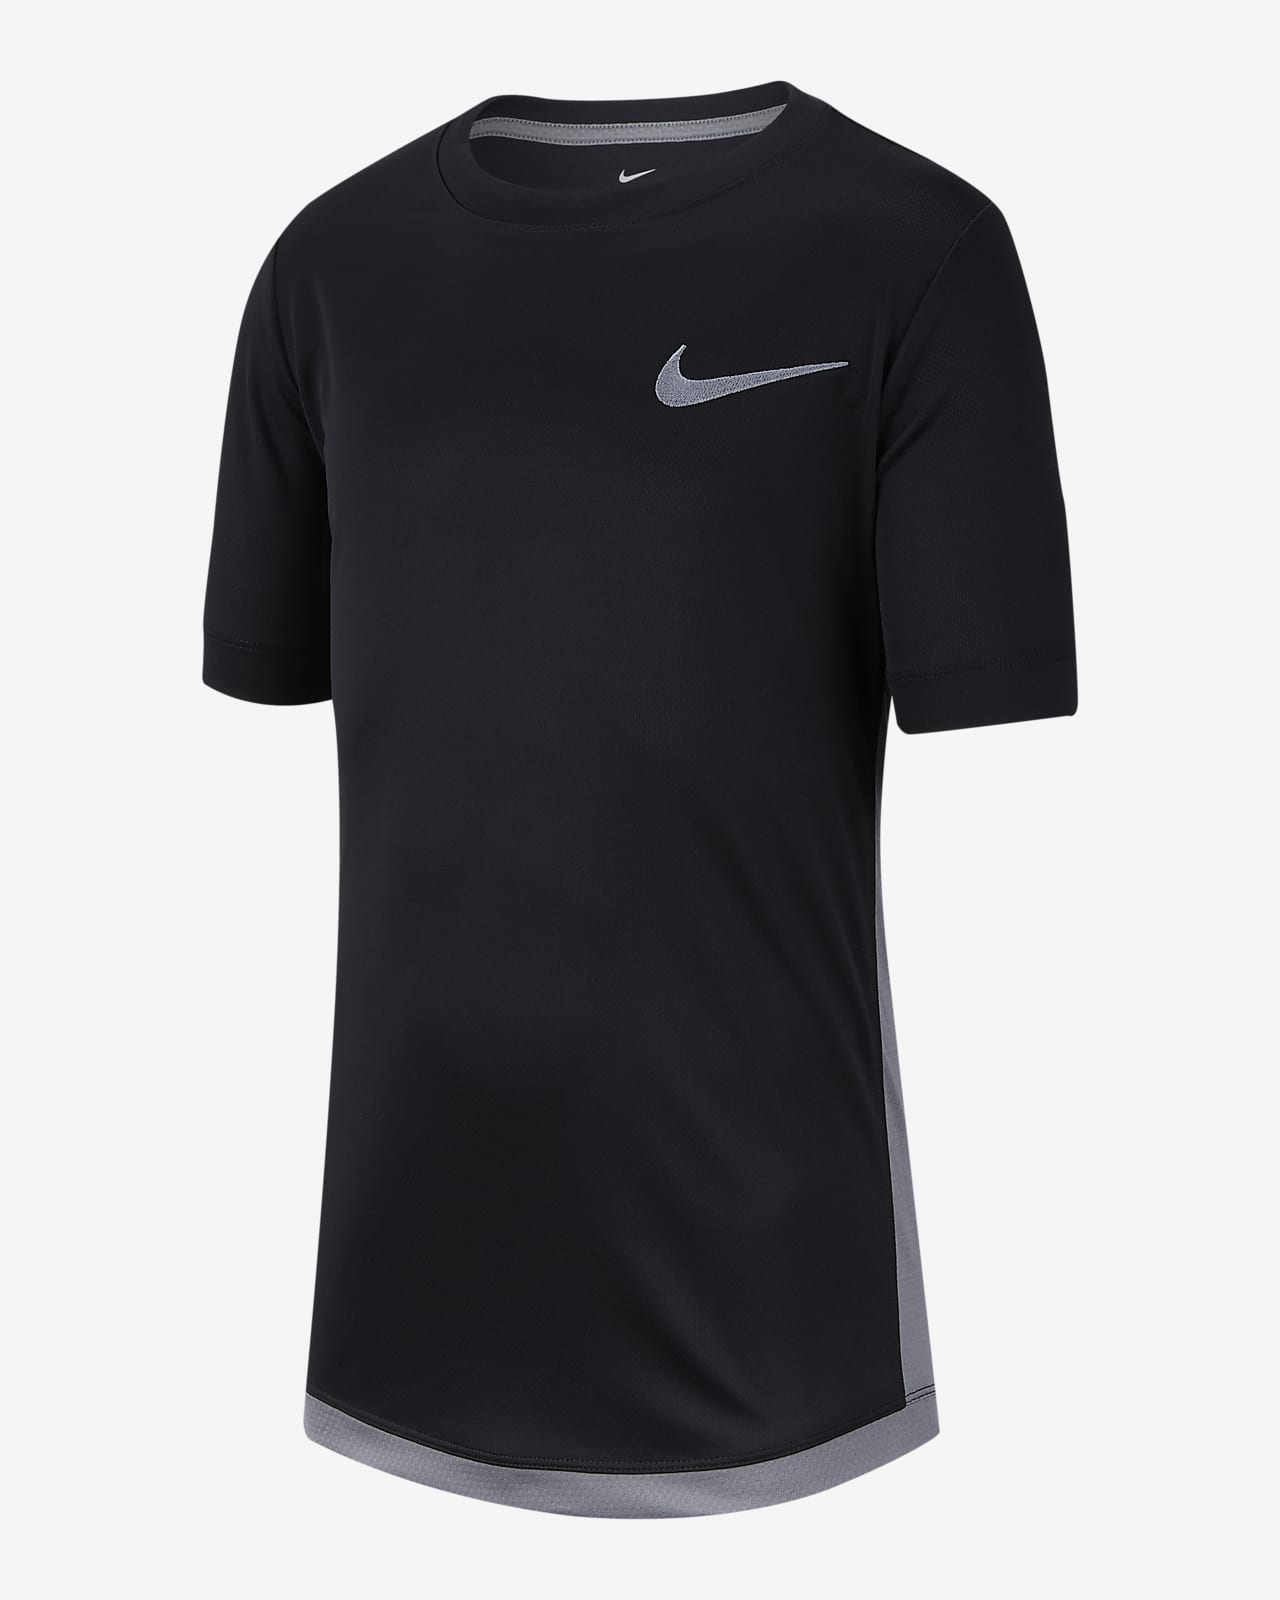 Nike公式 ナイキ Dri Fit ジュニア ボーイズ ショートスリーブ トレーニングトップ オンラインストア 通販サイト